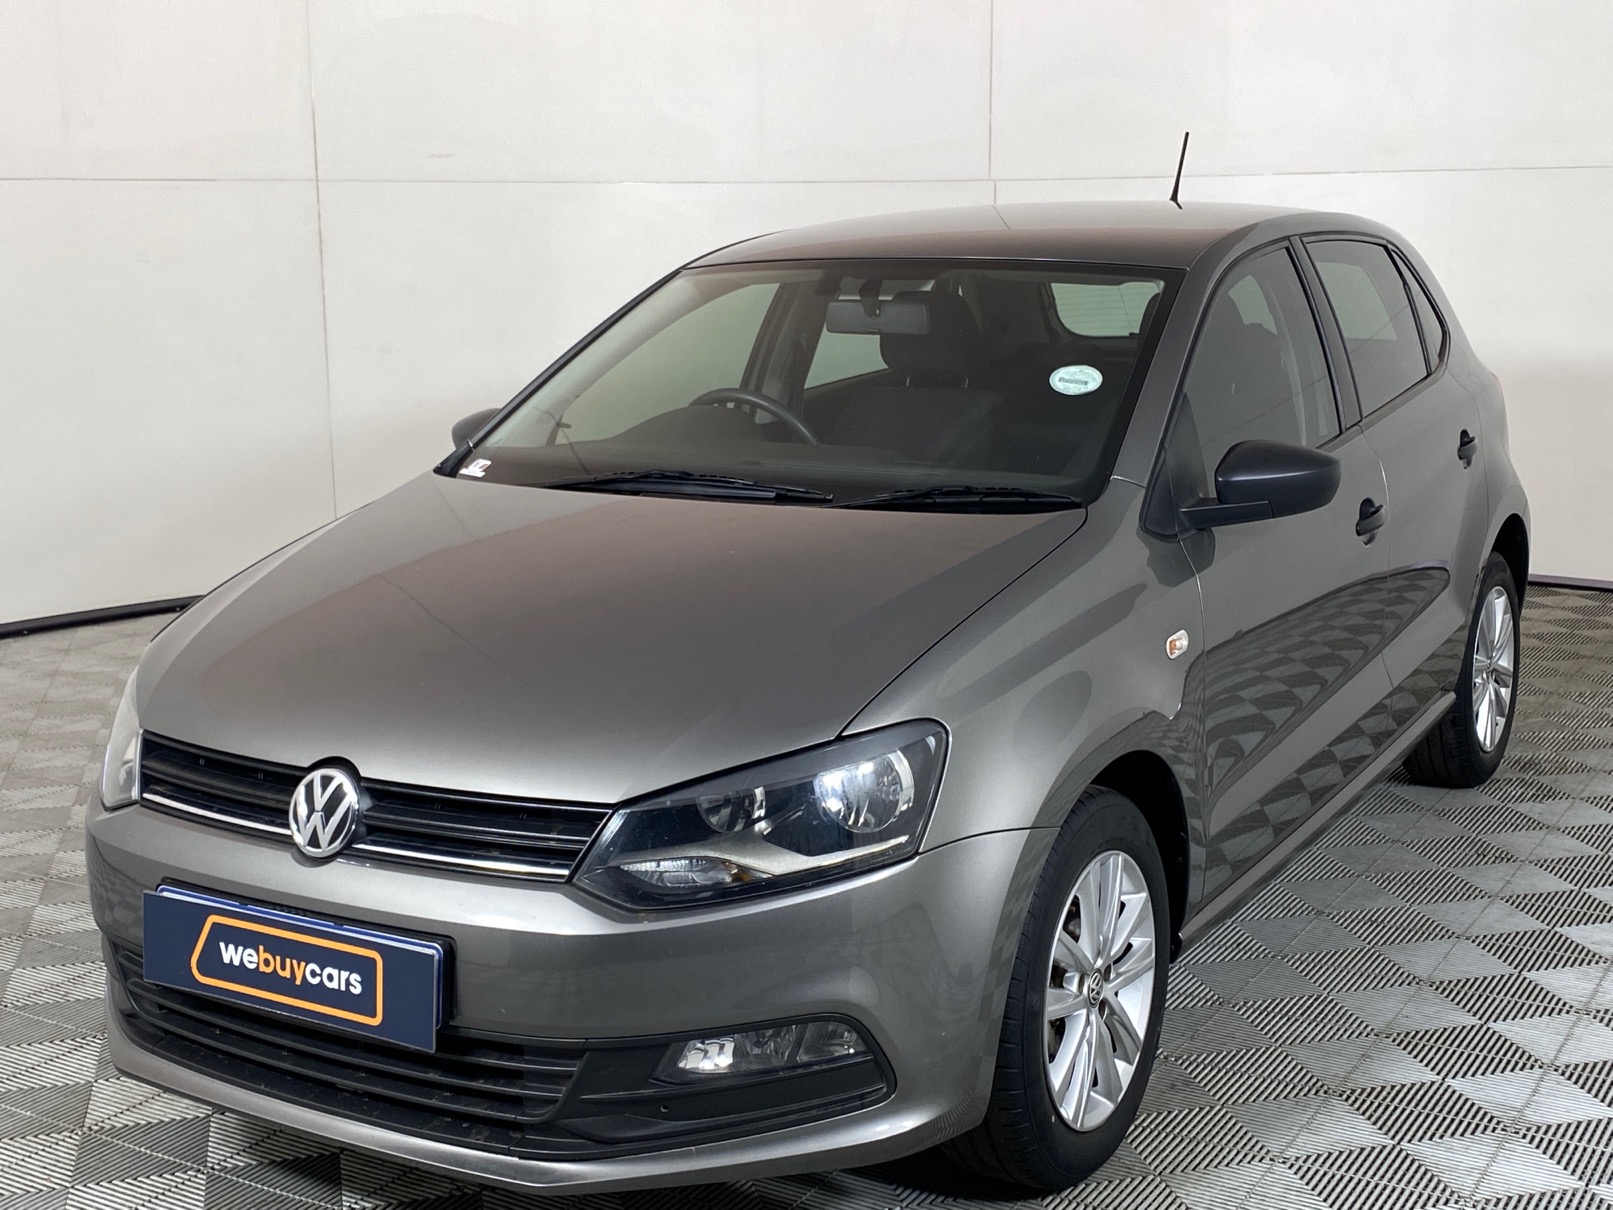 2019 Volkswagen Polo Vivo 1.4 Trendline (5dr)